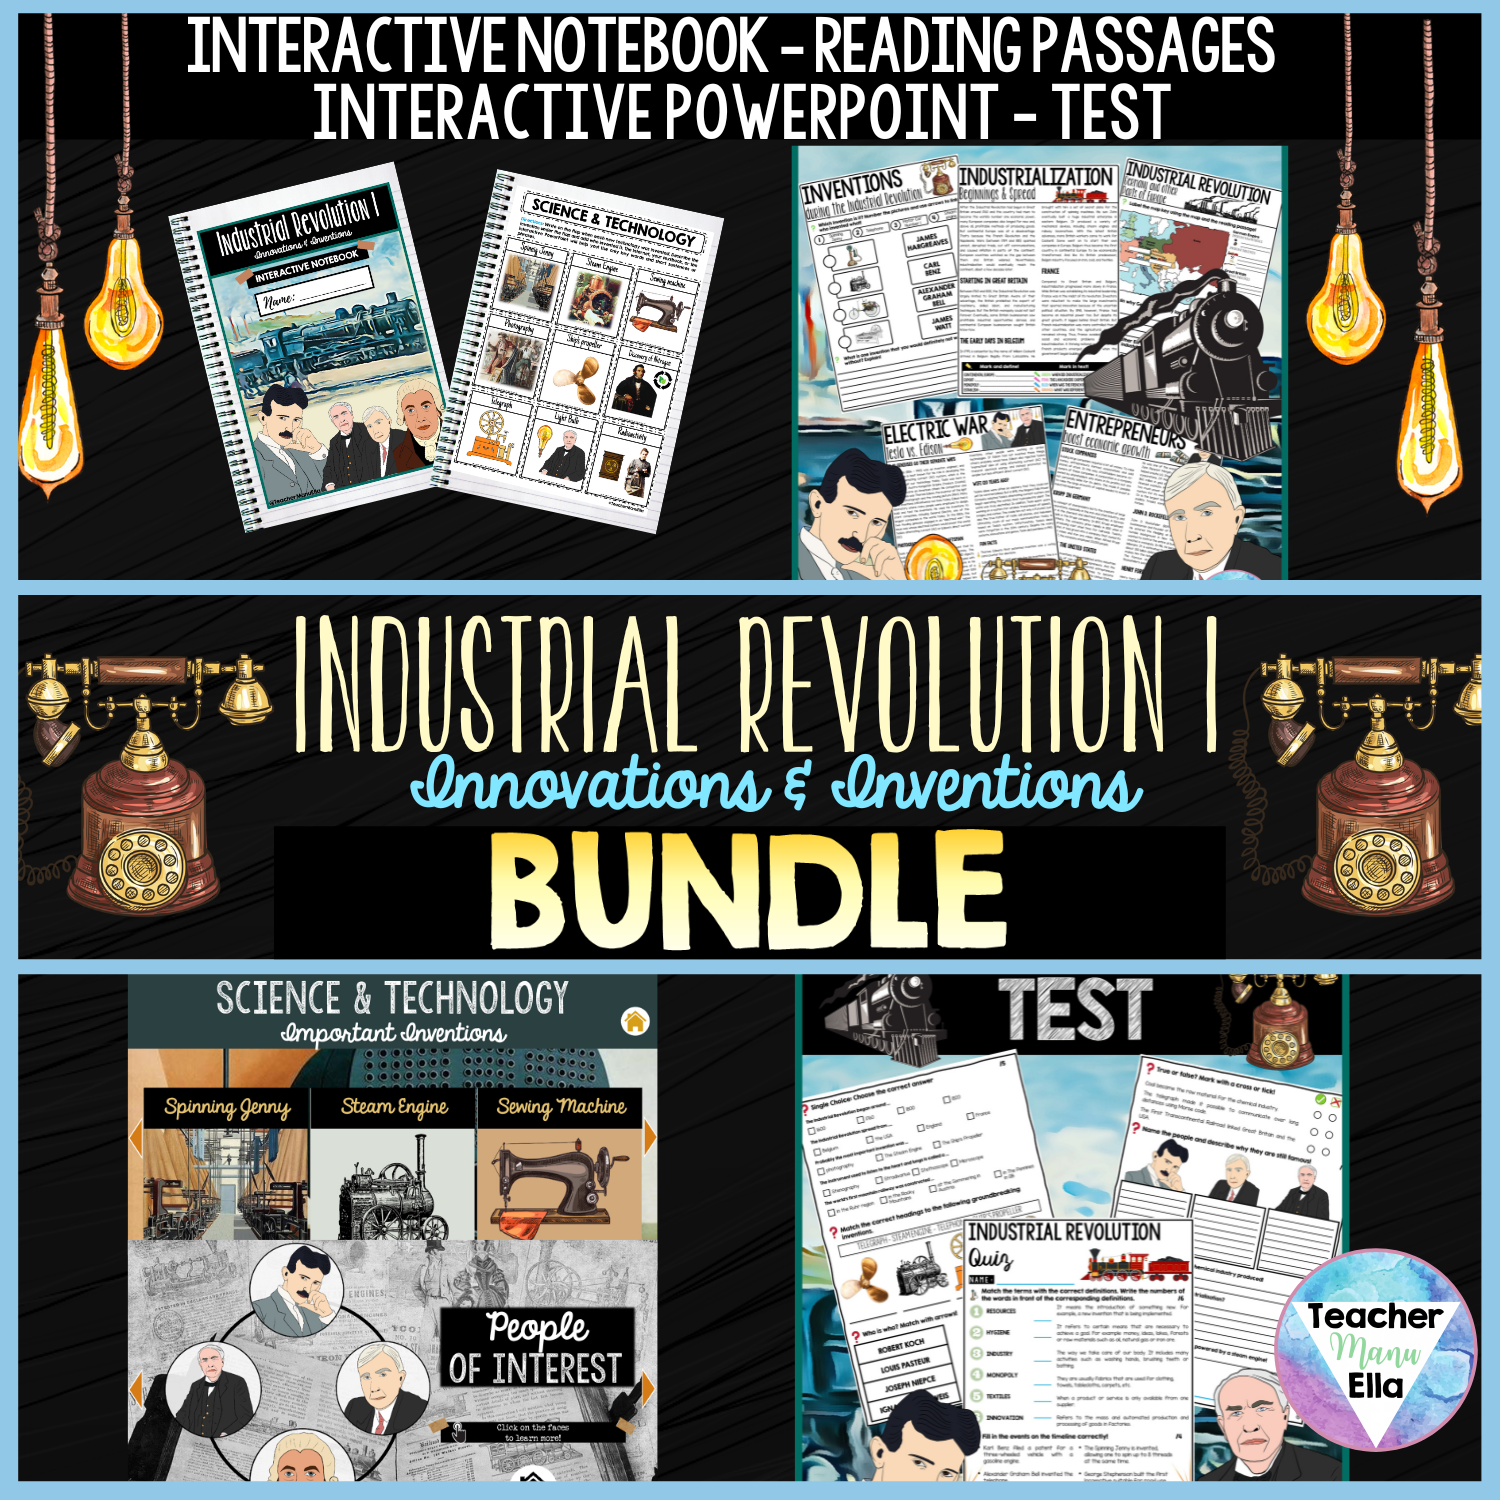 Industrial Revolution Teaching Resource Unit Bundle Curriculum by Teachermanuella